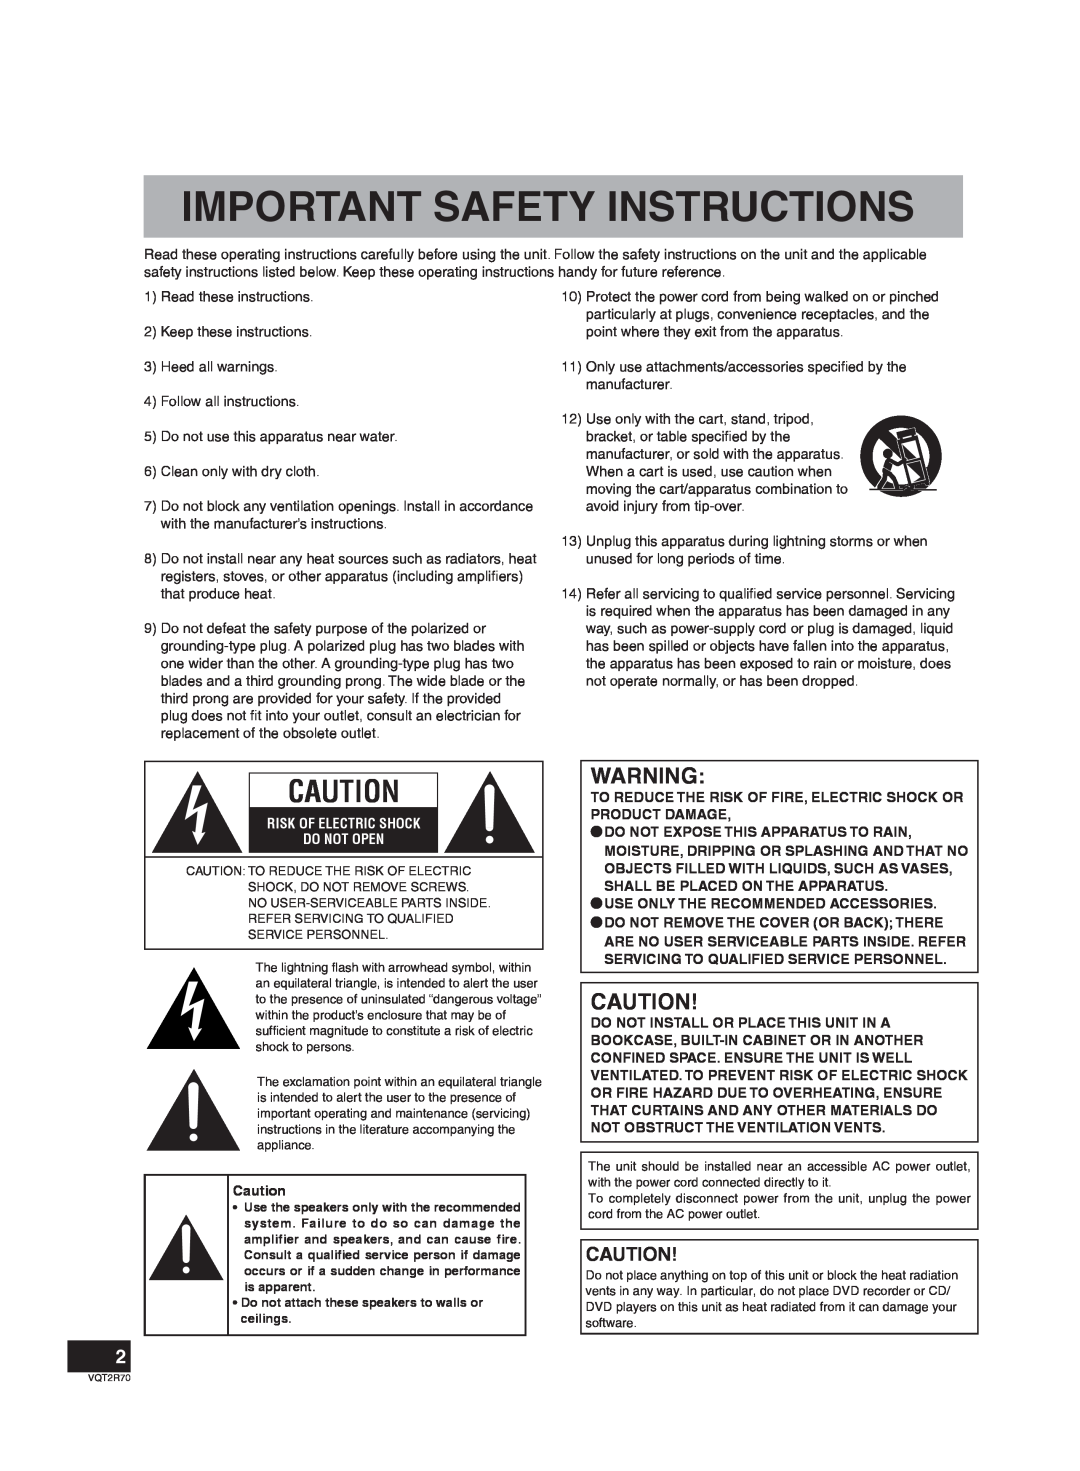 Panasonic SC-ZT2 warranty Important Safety Instructions, Risk Of Electric Shock Do Not Open 